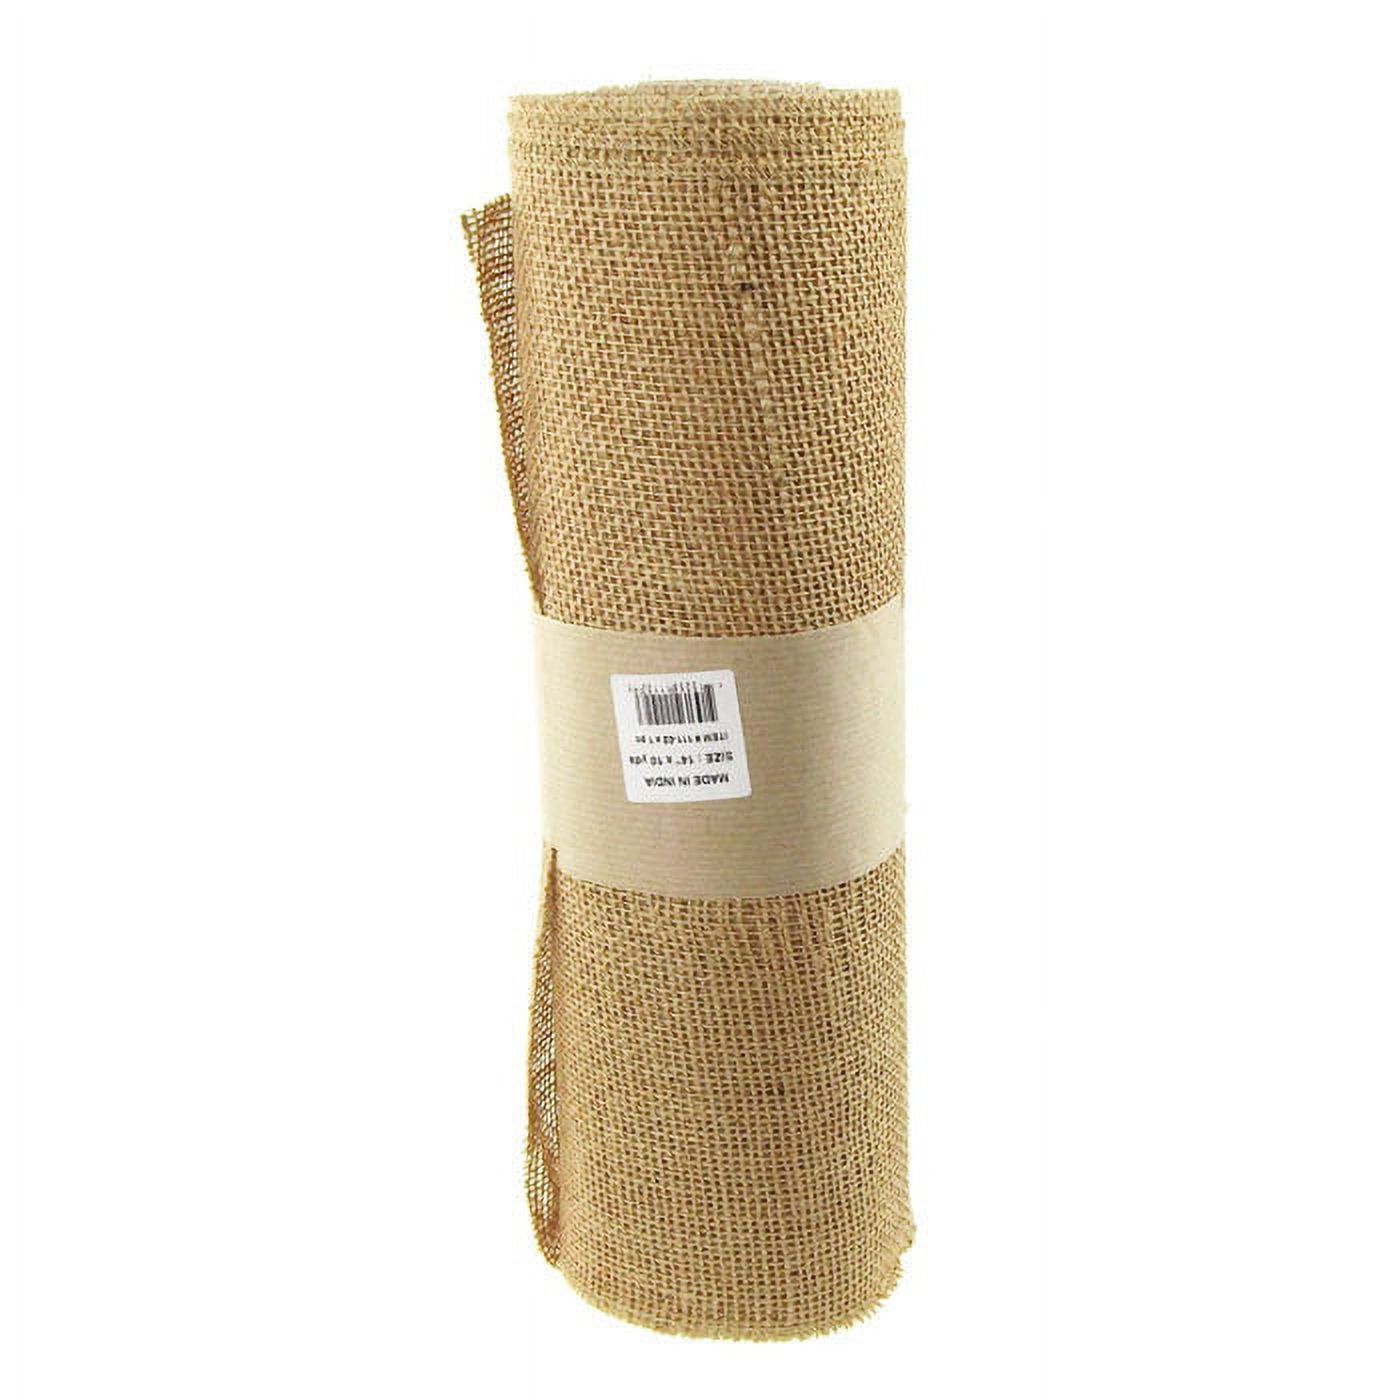 4 Inch 10 oz Burlap Roll- Natural Burlap 4 inch wide - Burlap Fabric –